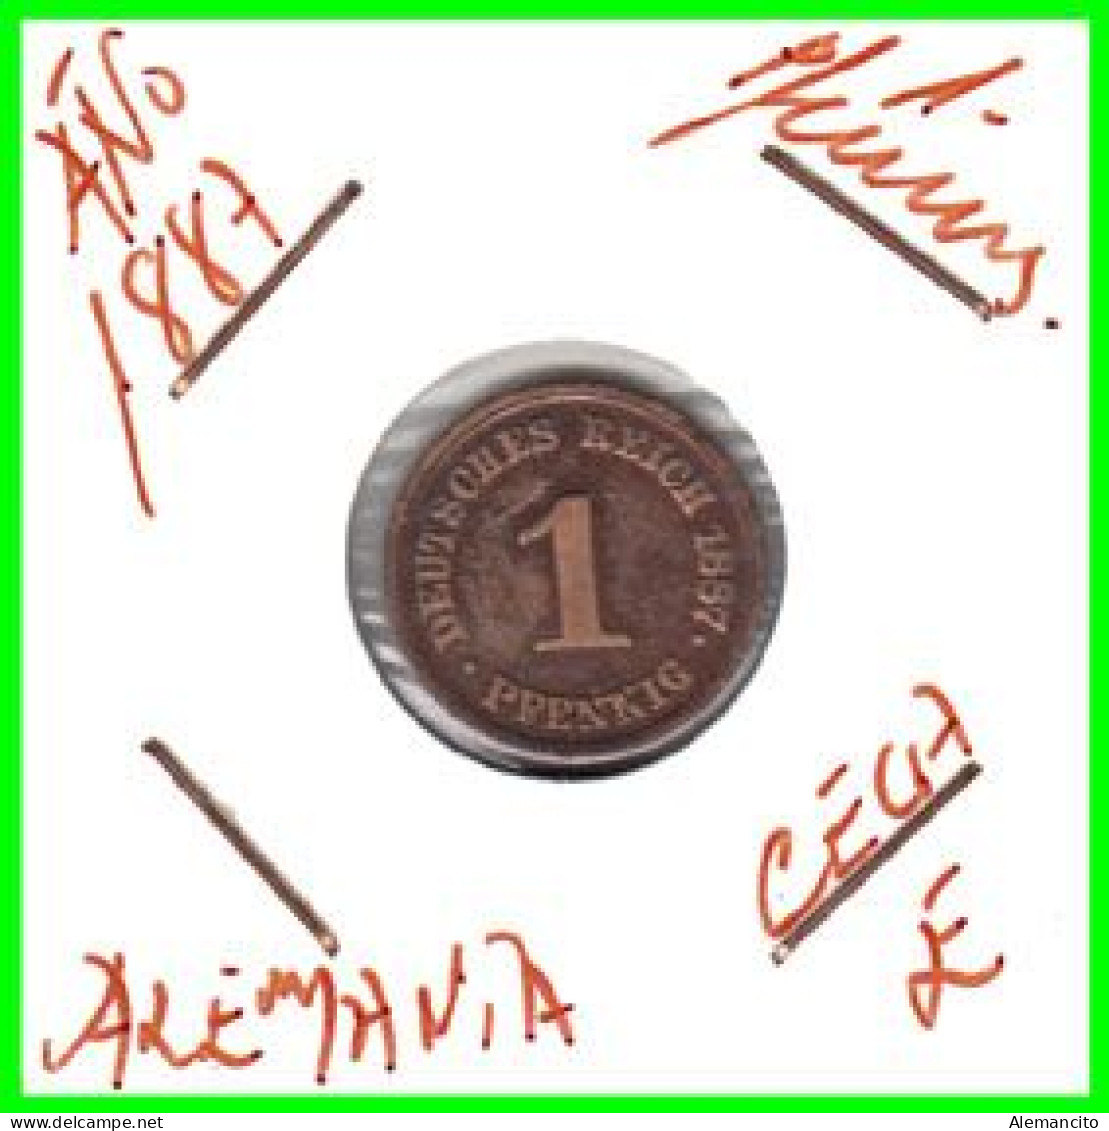 ALEMANIA – GERMANY - IMPERIO MONEDA DE COBRE DIAMETRO 17.5 Mm. DEL AÑO 1887 – CECA-E- KM-1  GOBERNANTE: GUILLERMO I - 1 Pfennig